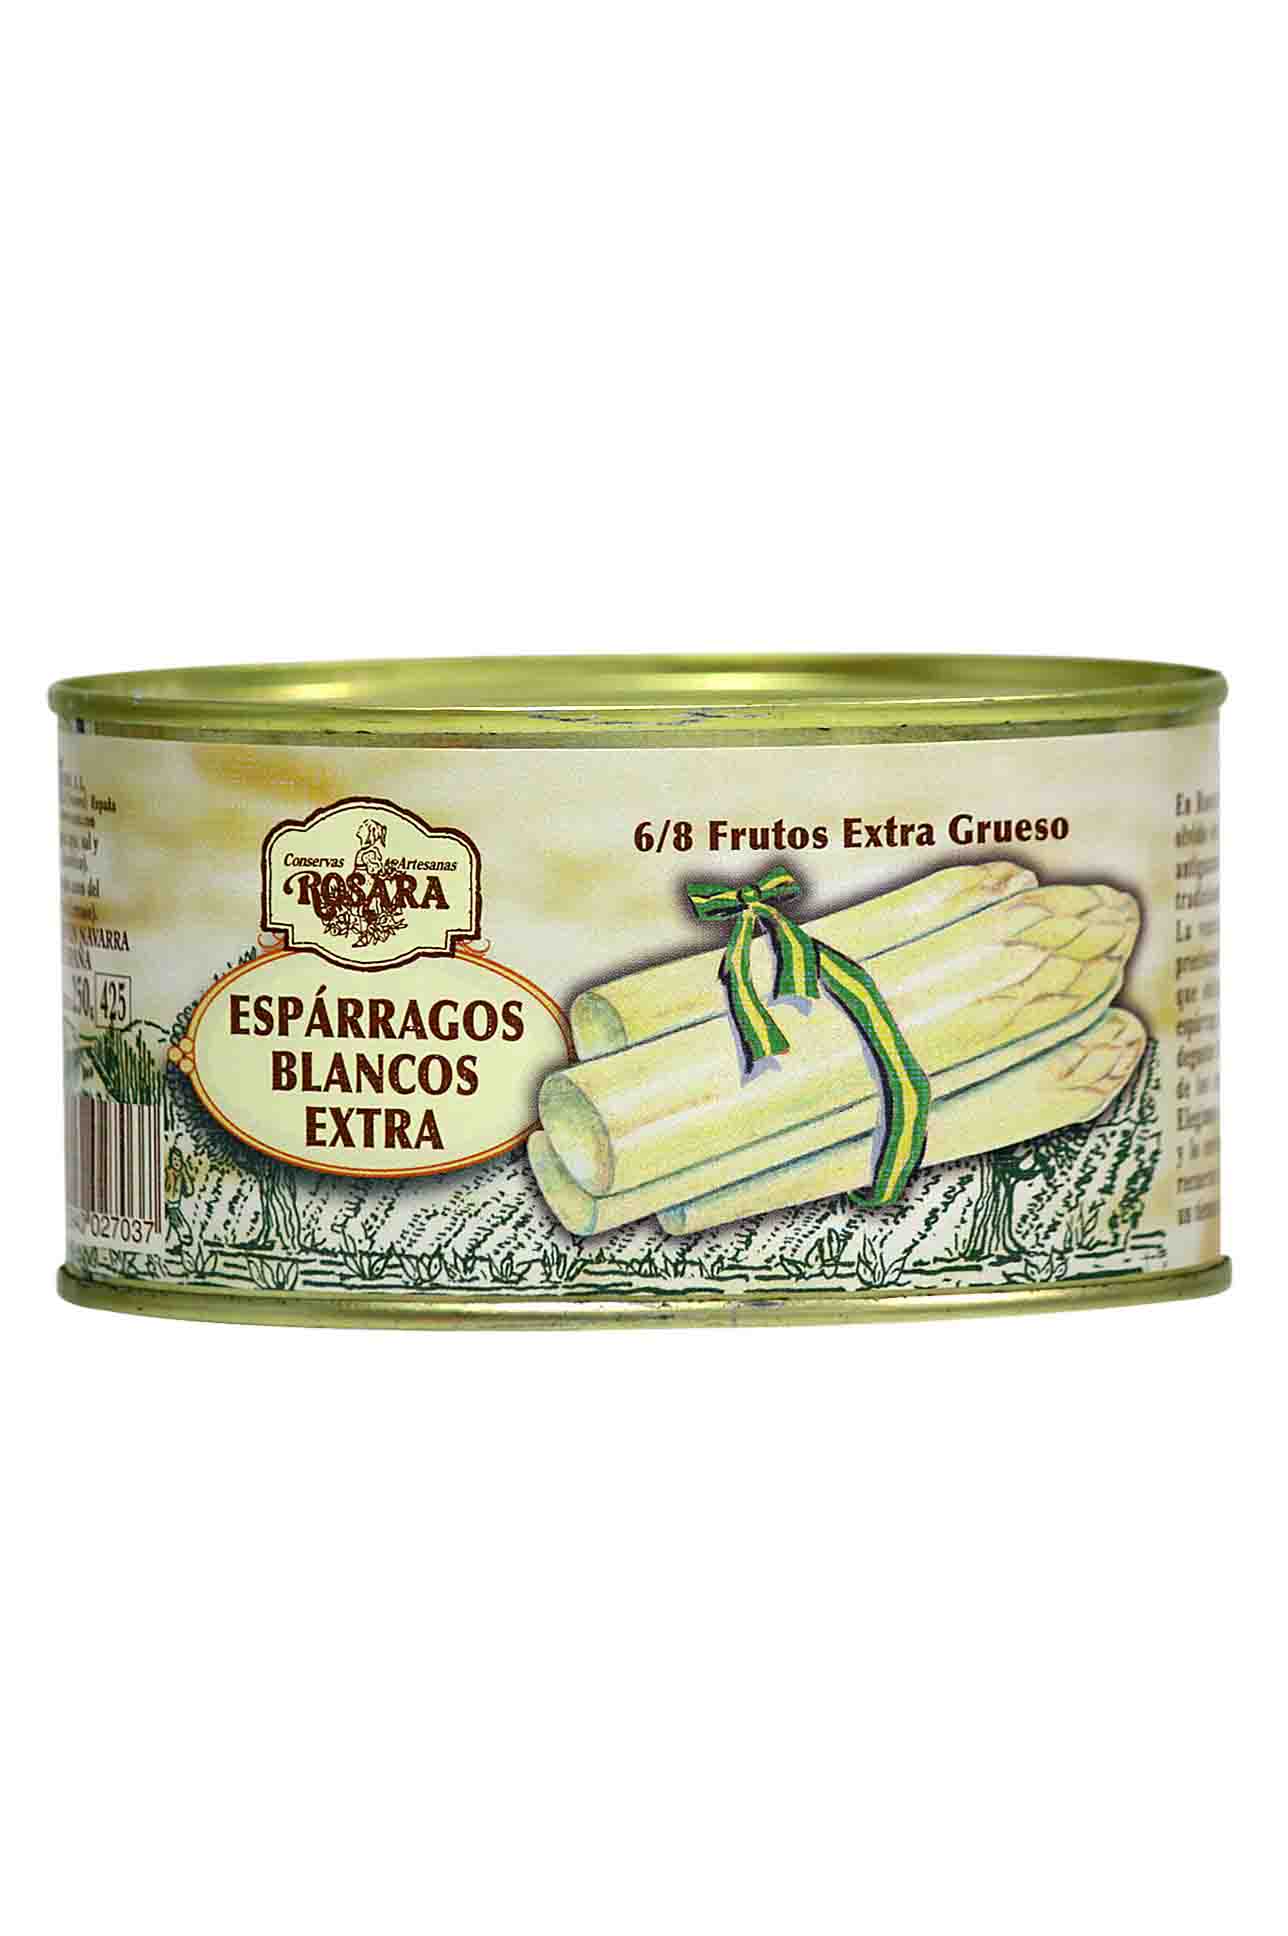 Extra asparagus from Navarra